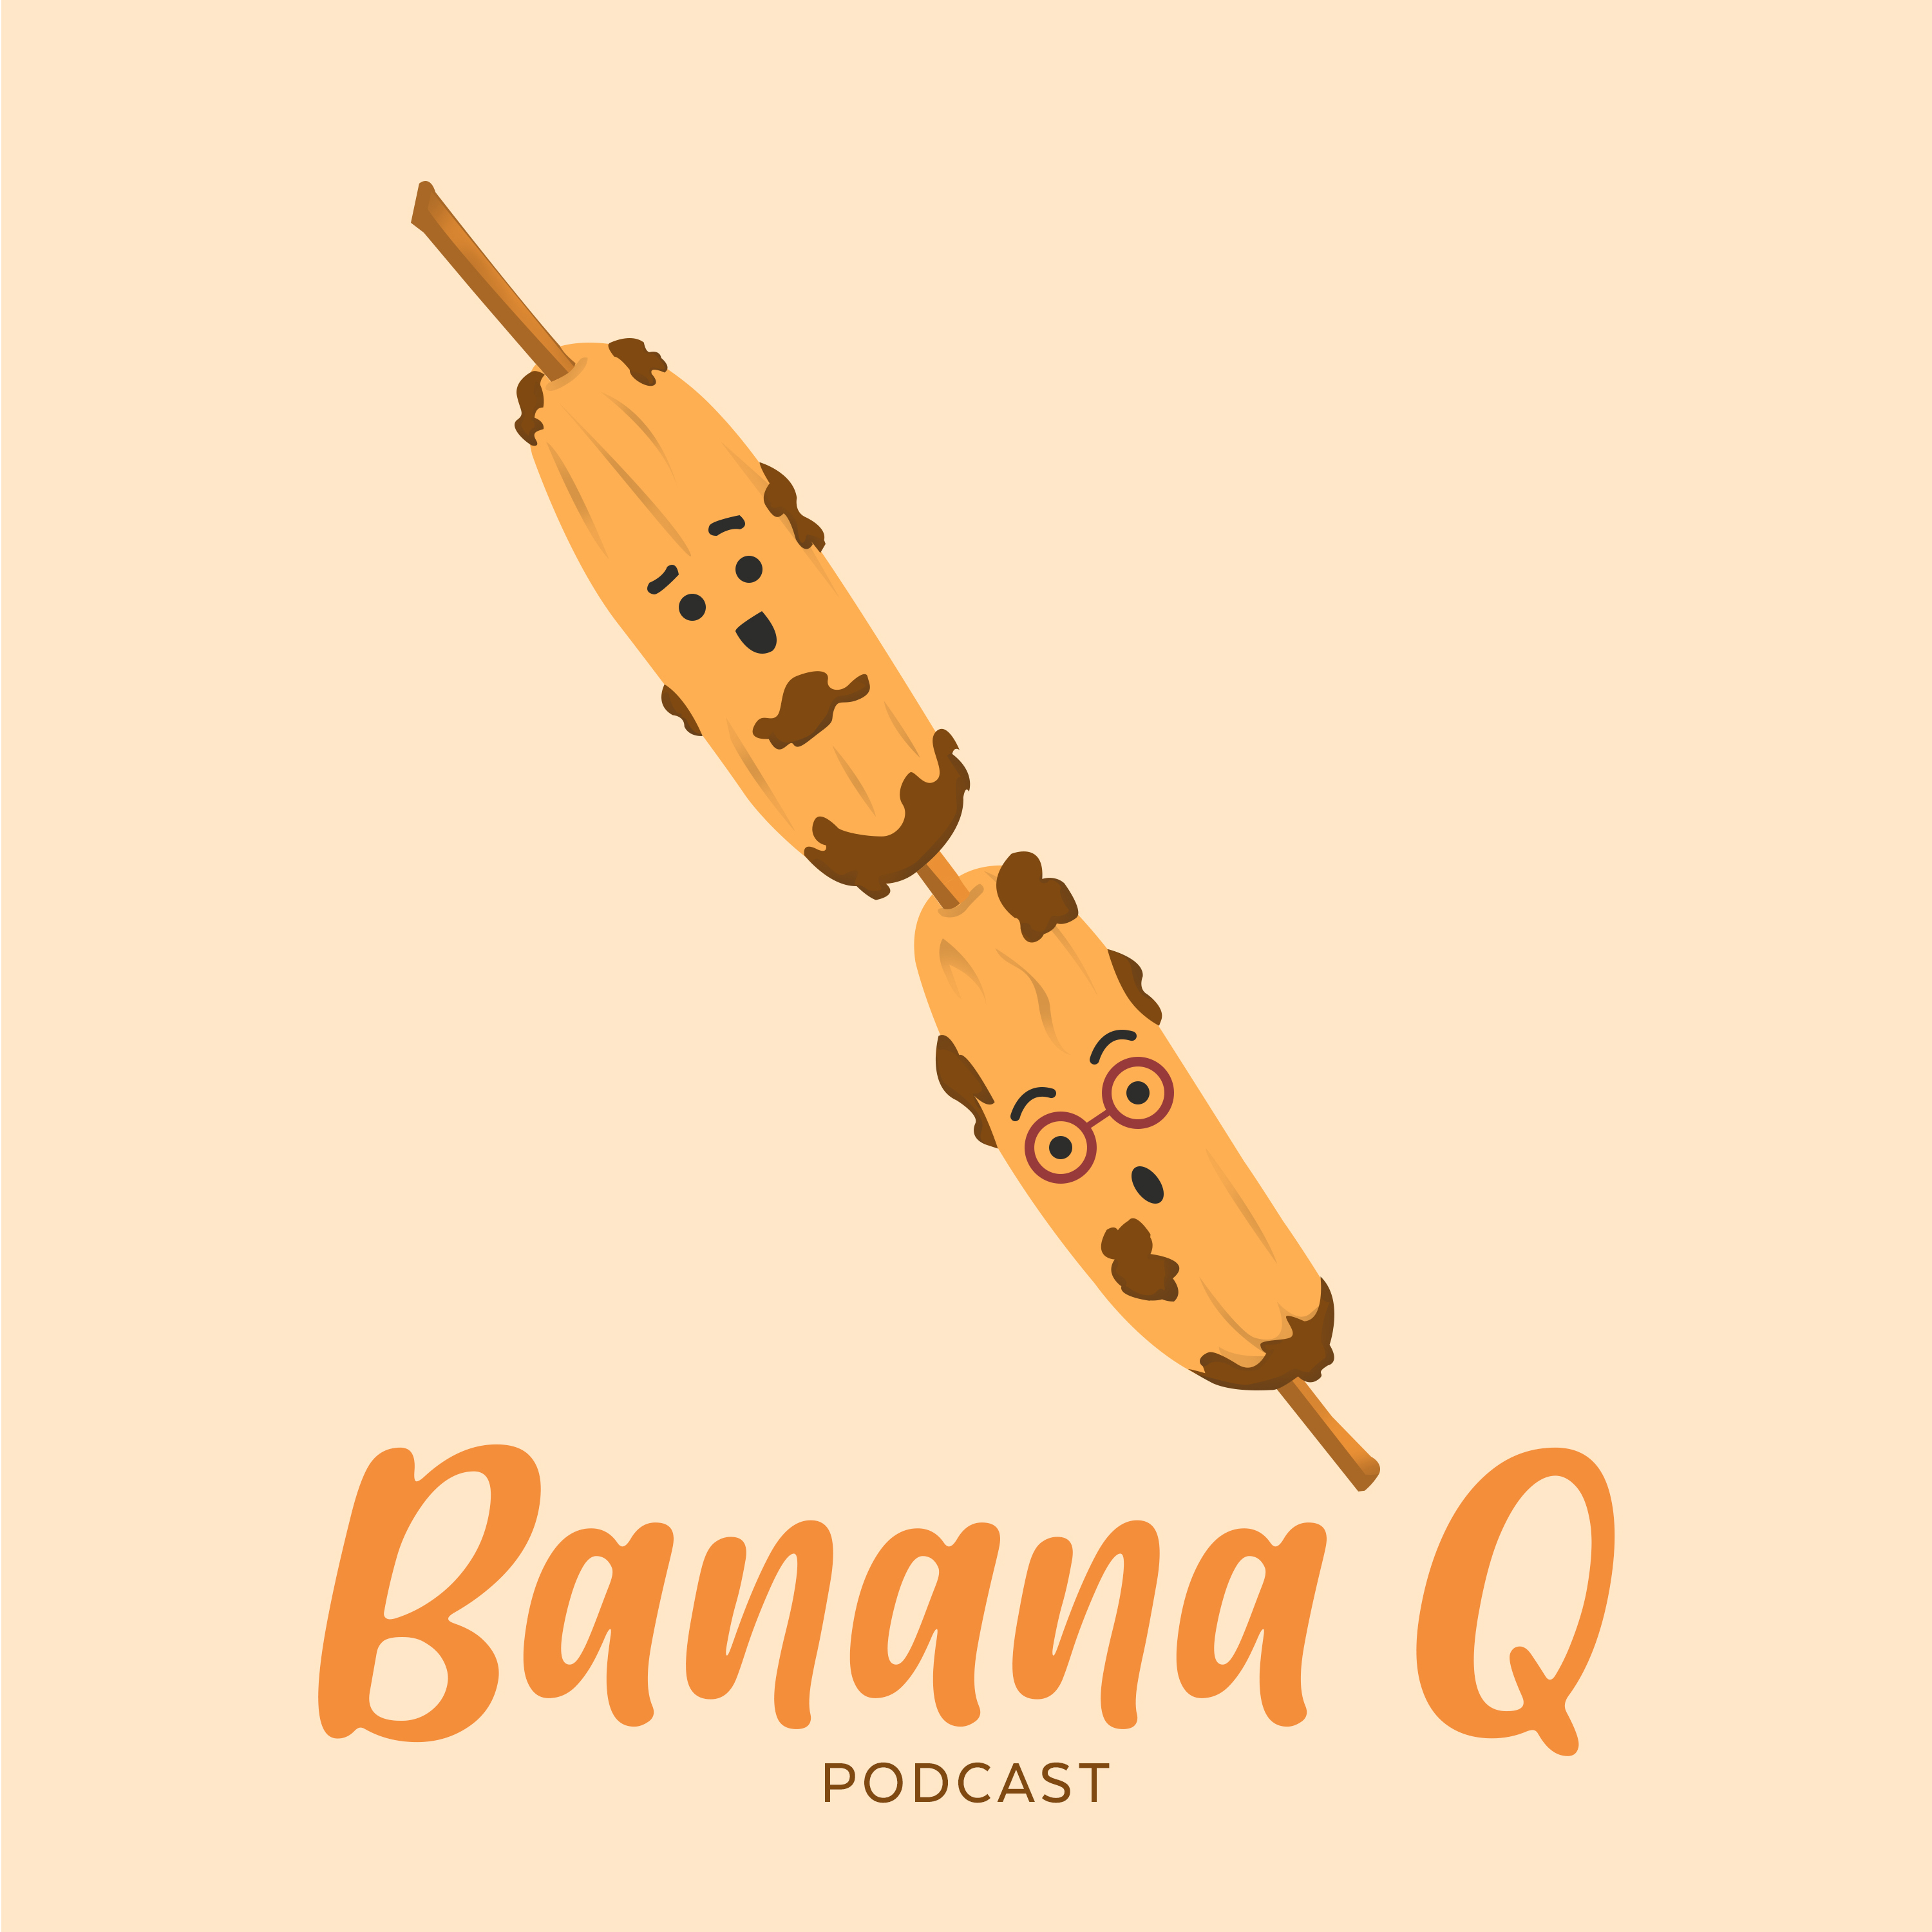 Banana Q Podcast